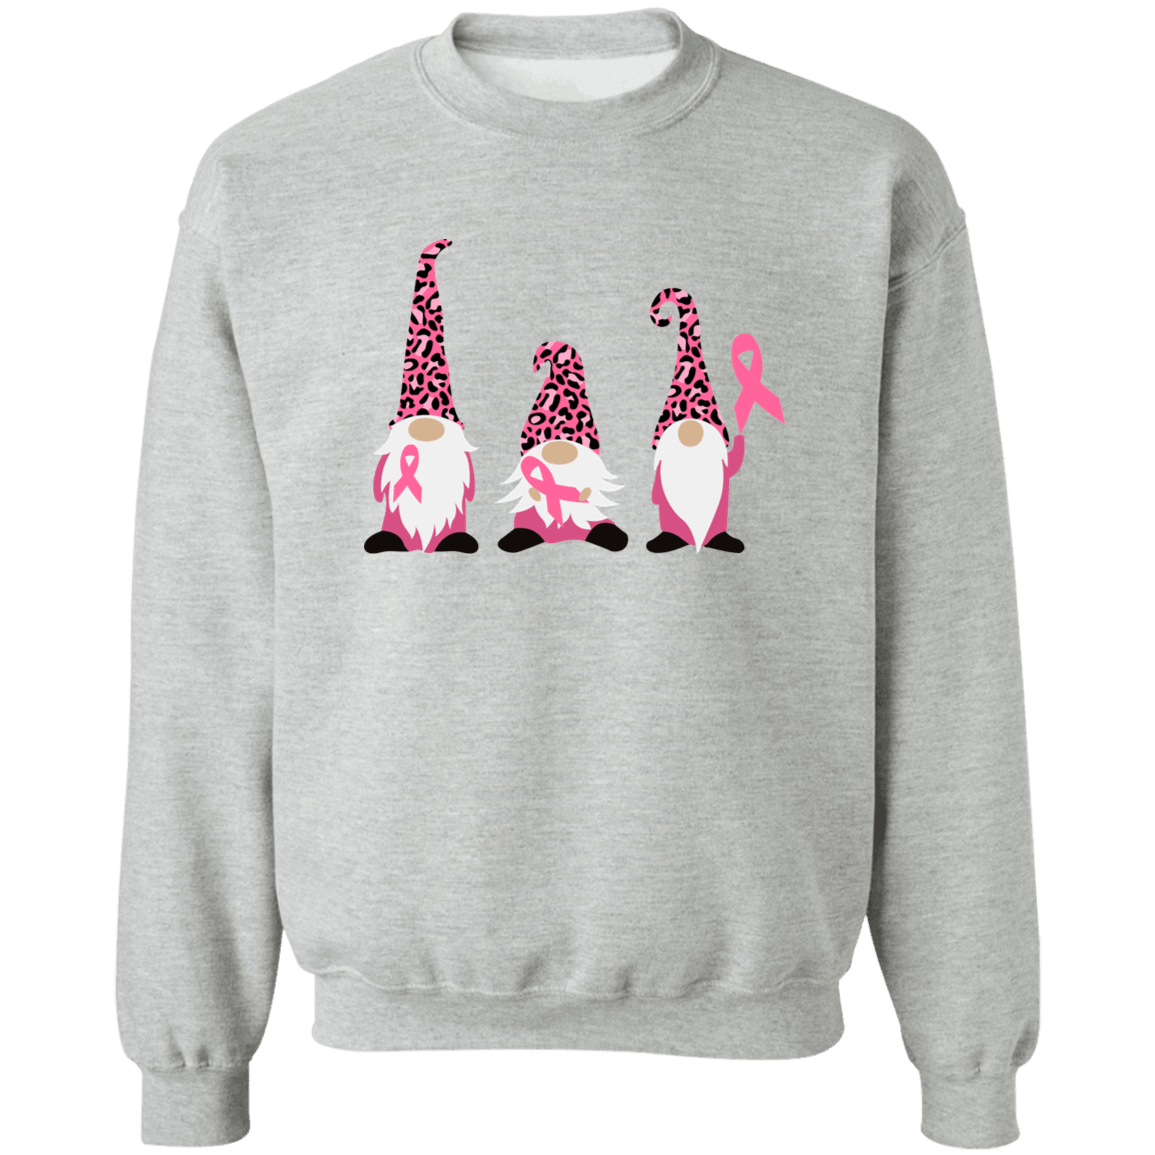 Cancer Gnomes Unisex Crewneck Pullover Sweatshirt